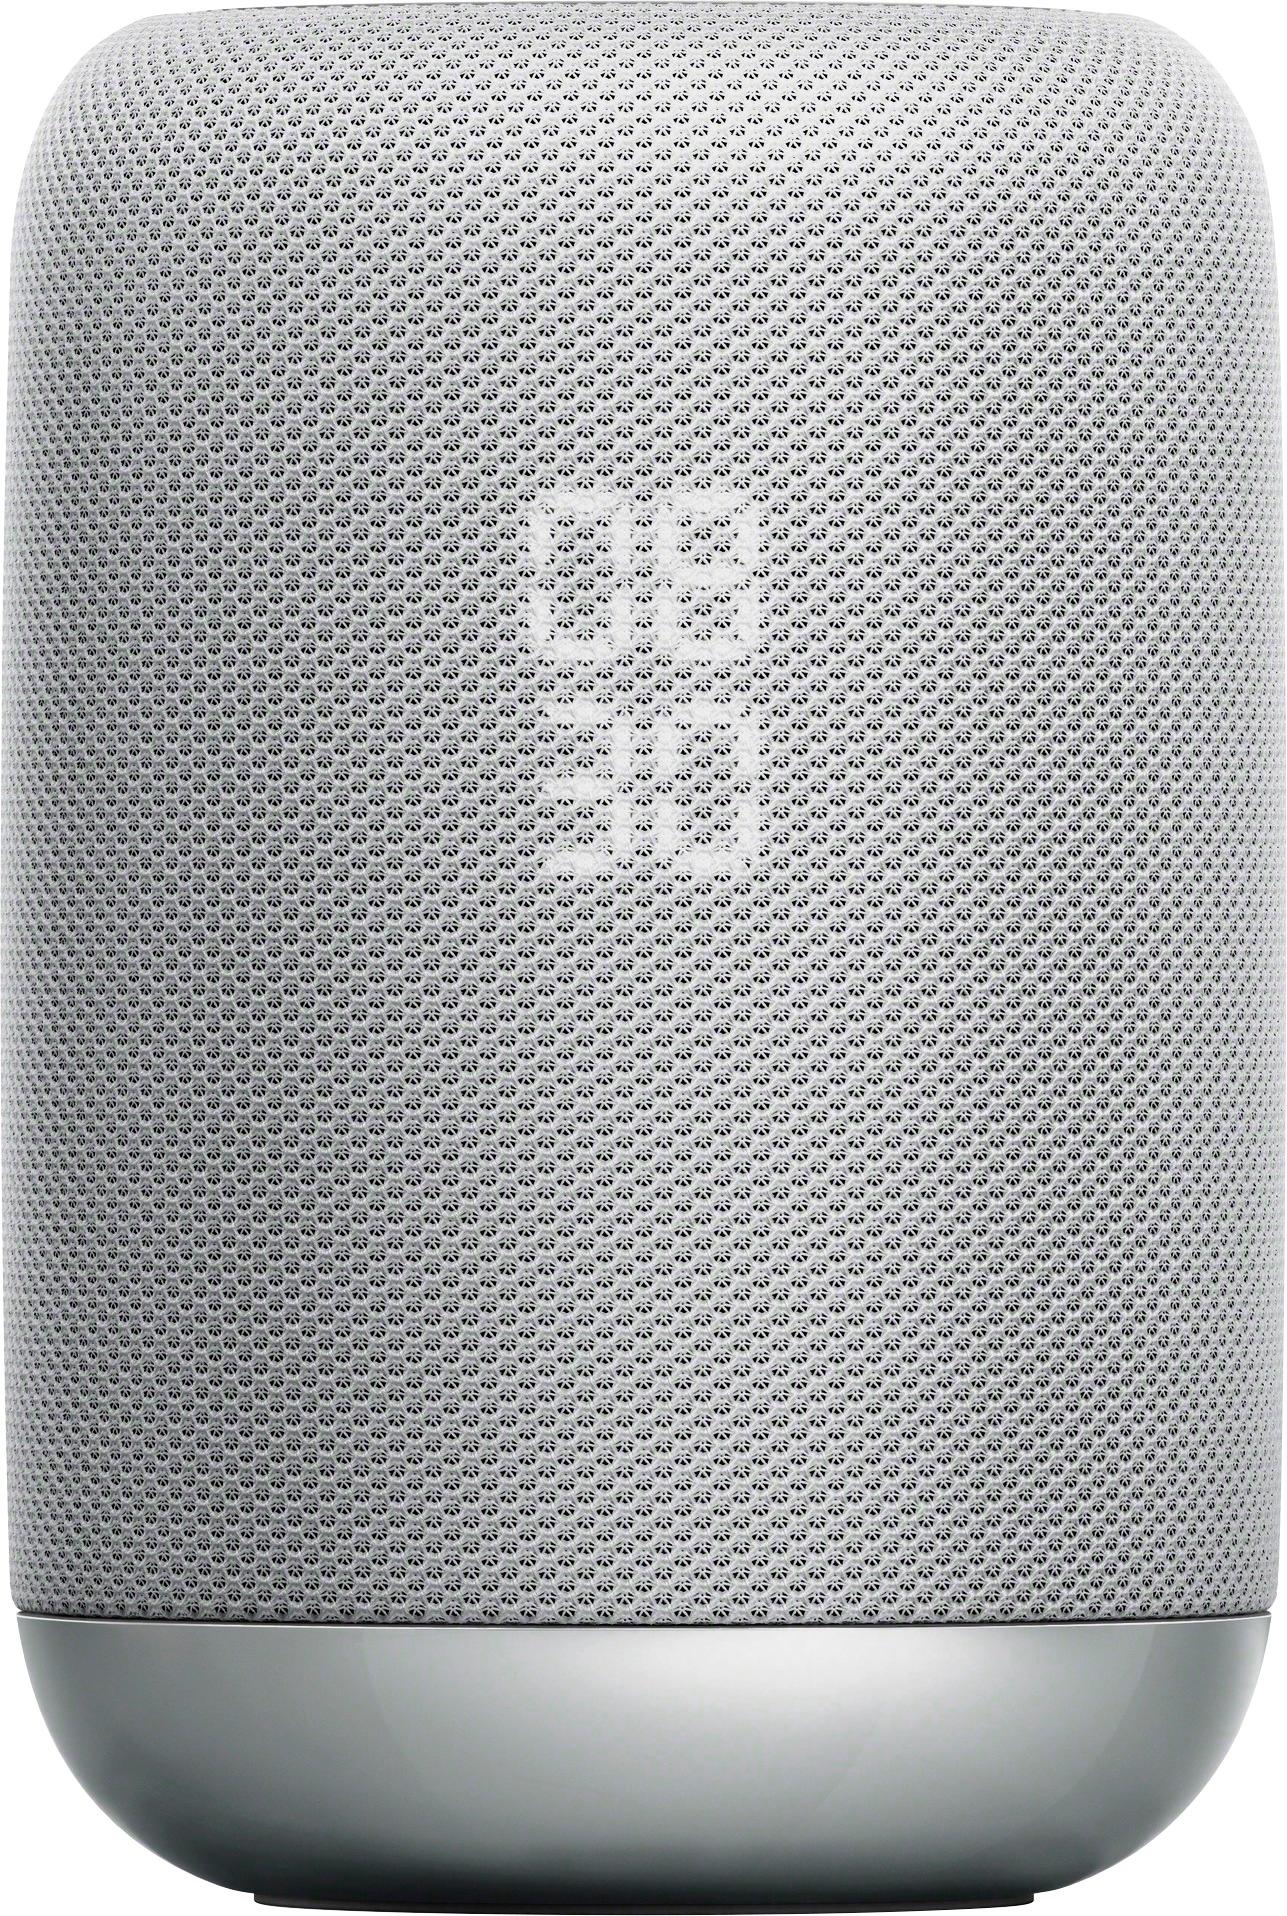 Sony LF-S50G Smart Bluetooth Speaker White LFS50G/W - Best Buy